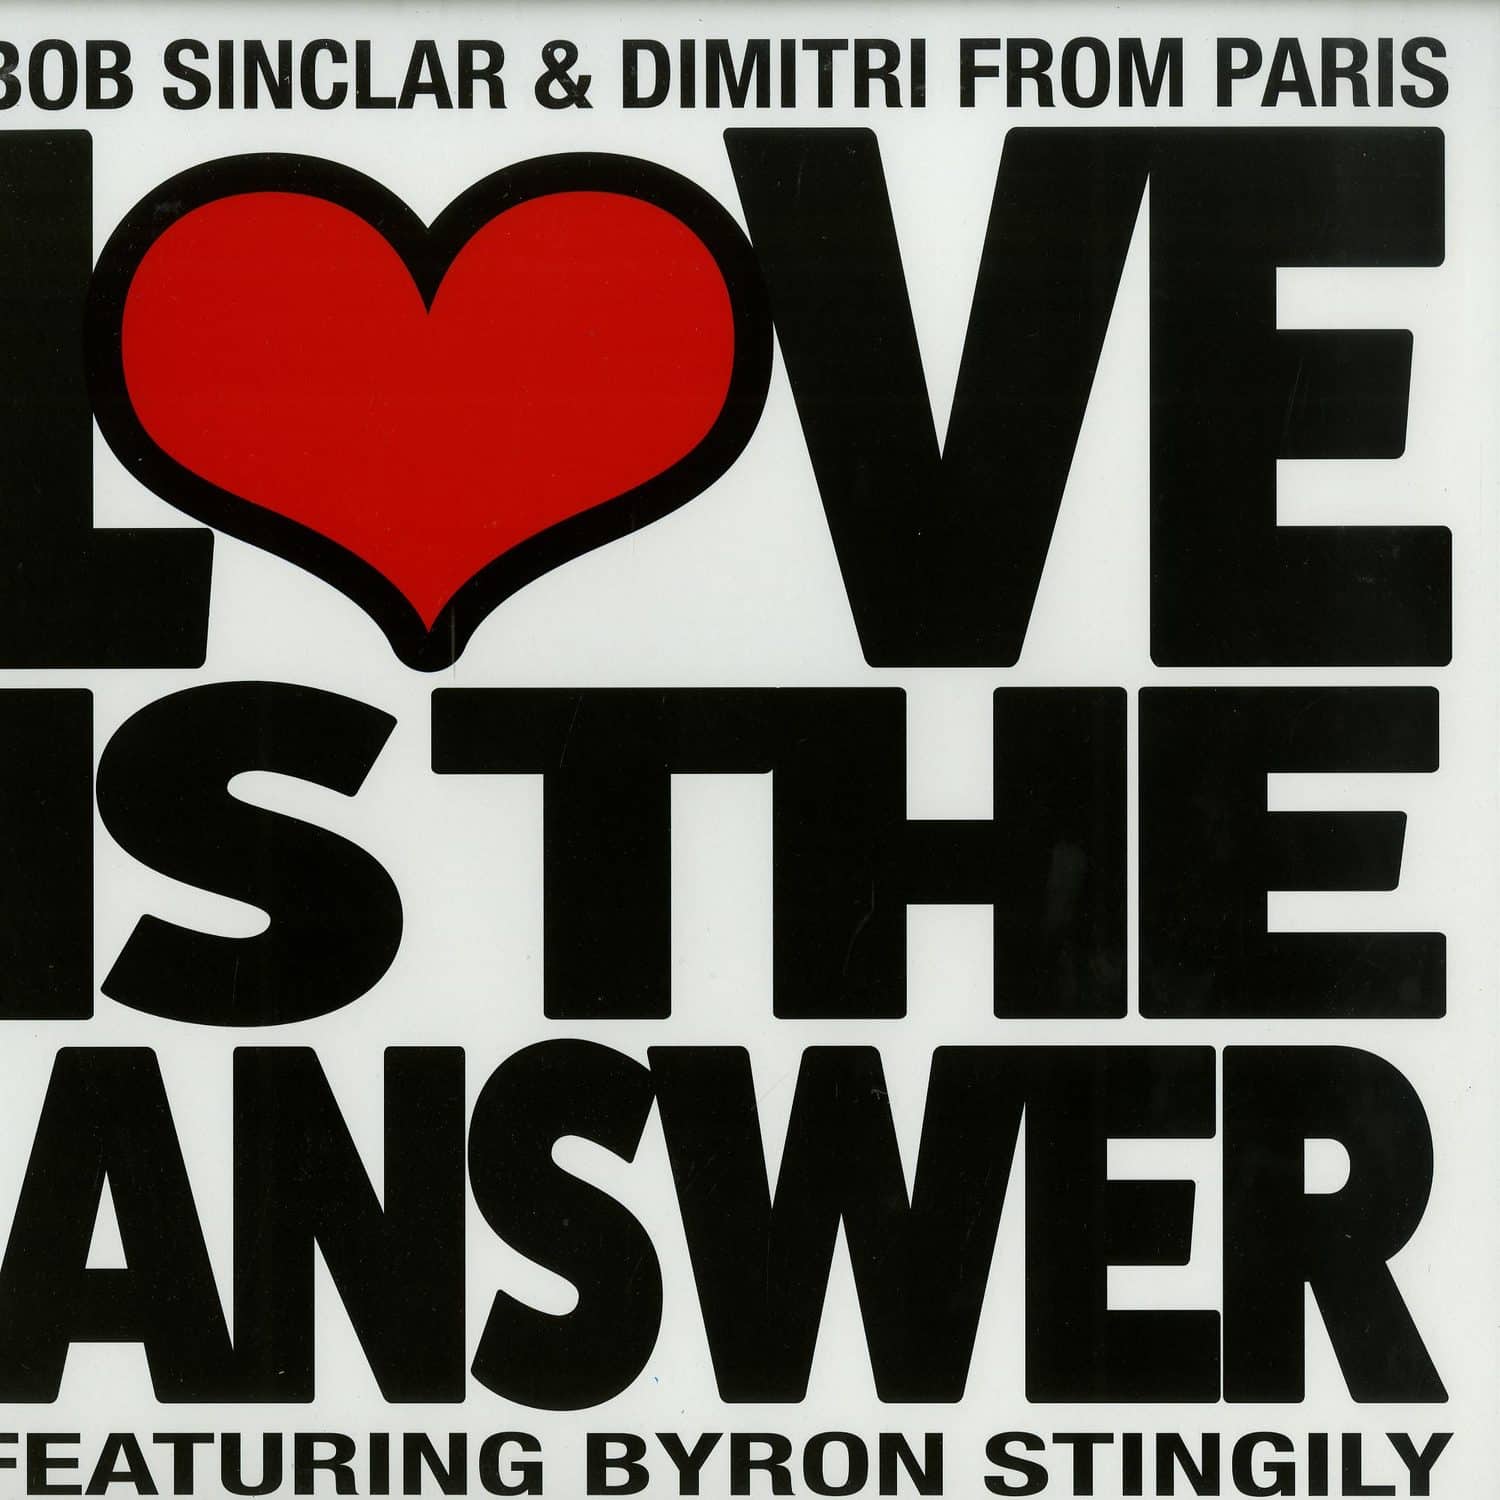 Bob Sinclar & Dimitri From Paris ft. Byron Stingily - LOVE IS THE ANSWER